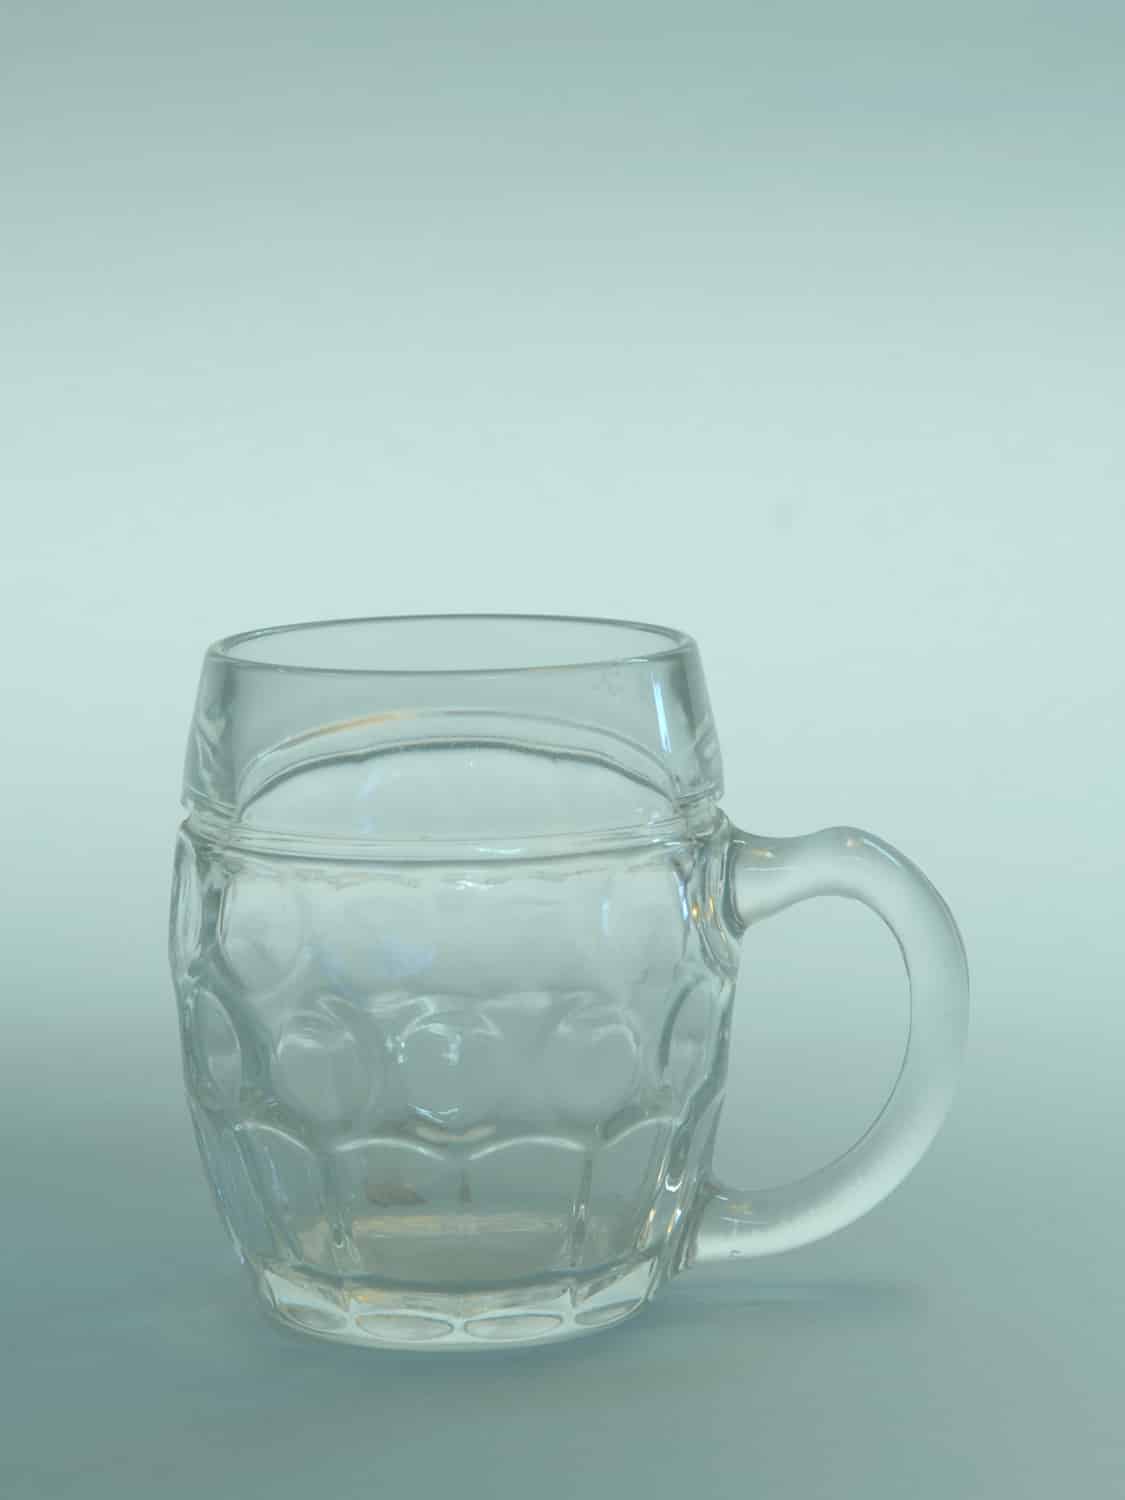 Sugar glass, small beer mug 0.3L belly model 10.5 x 8.9 cm.